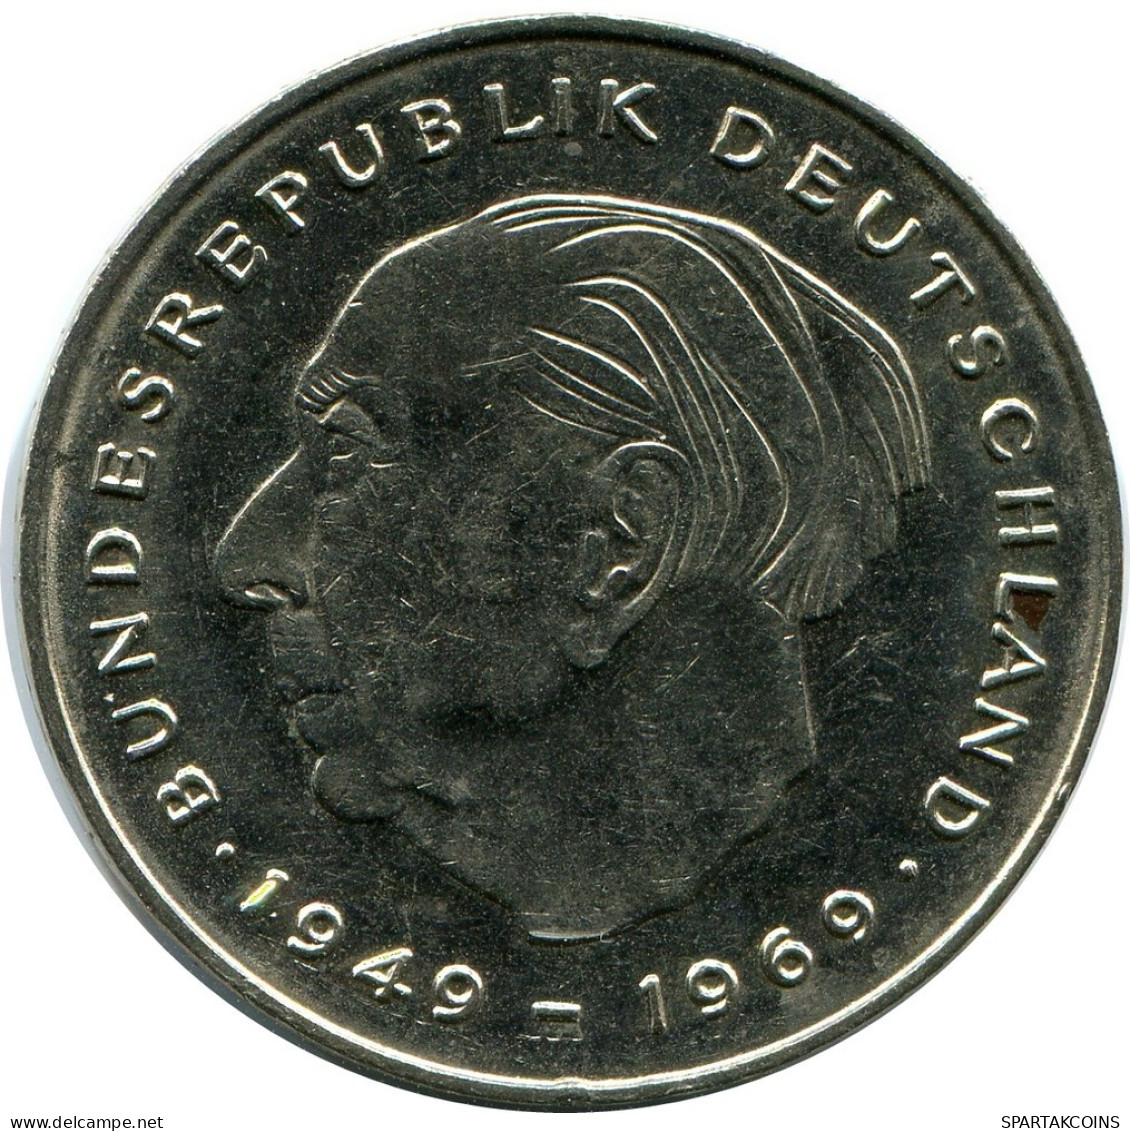 2 DM 1982 G T.HEUSS WEST & UNIFIED GERMANY Coin #AZ439.U.A - 2 Mark